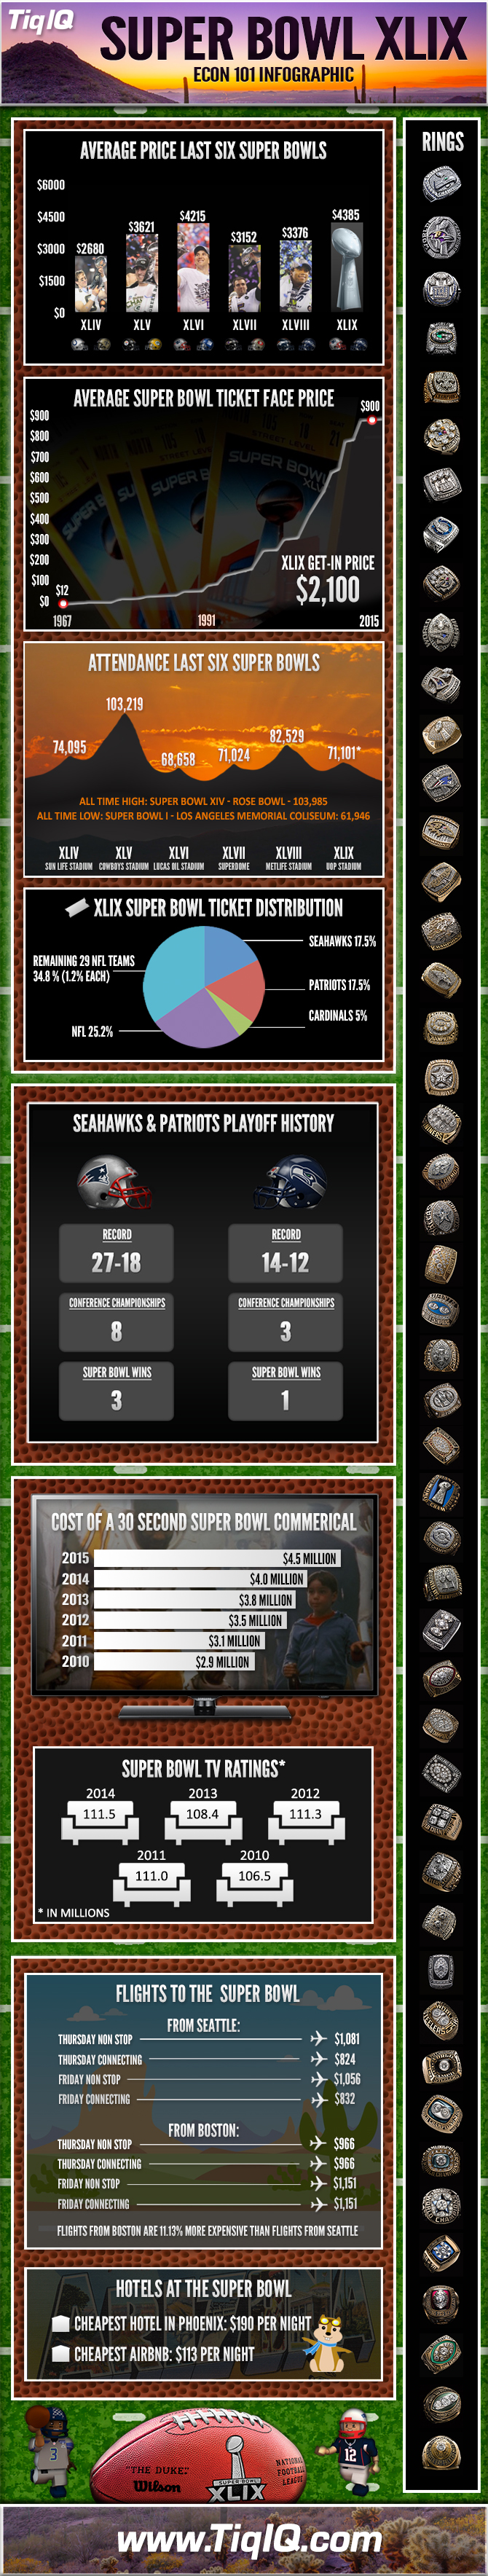 Super Bowl XLIX Infographic